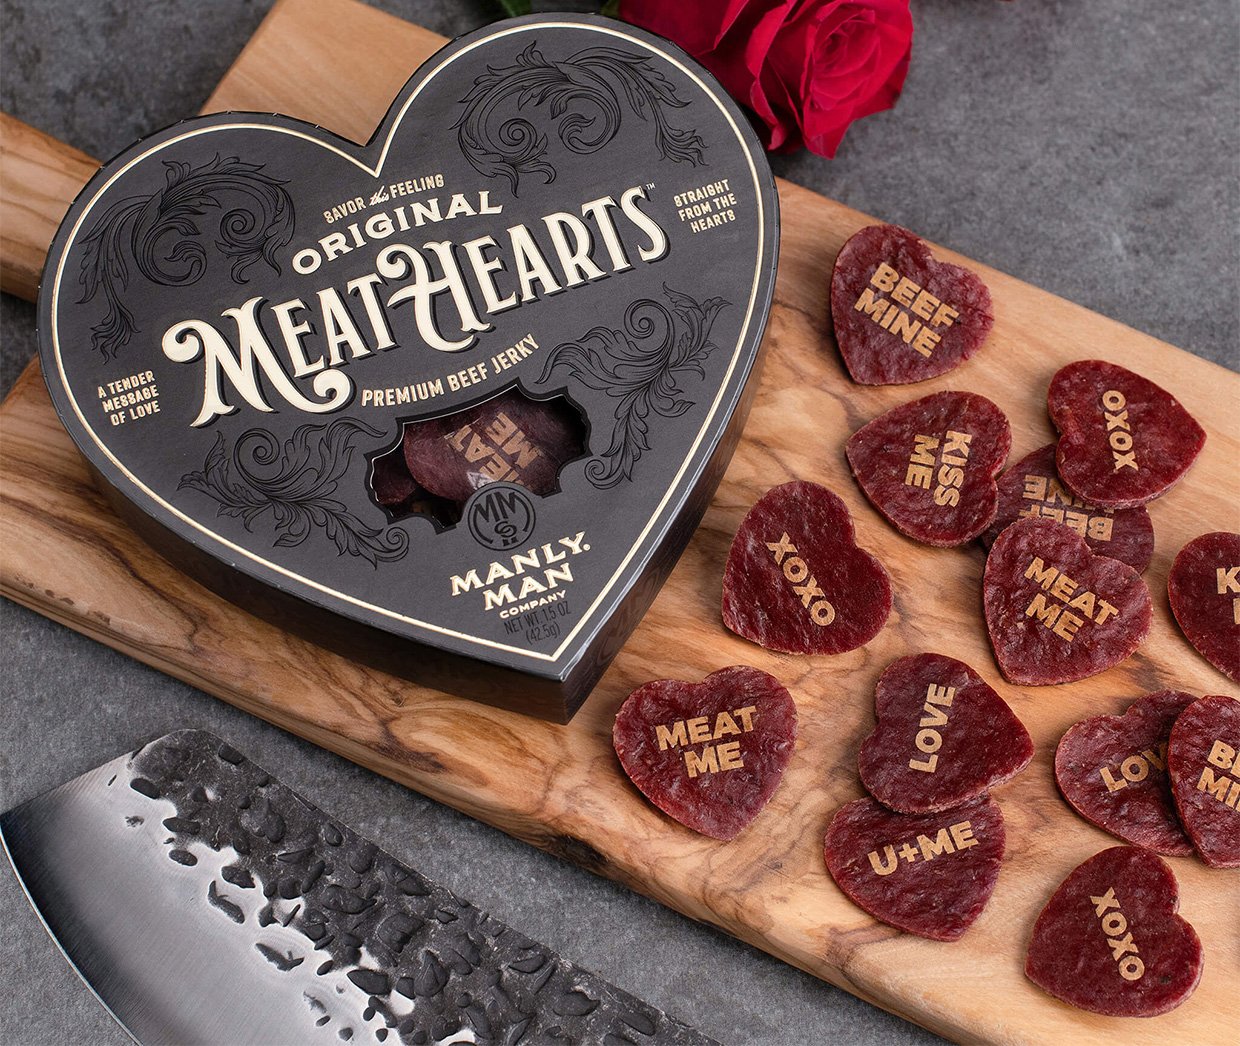 Valentine’s Day Meathearts